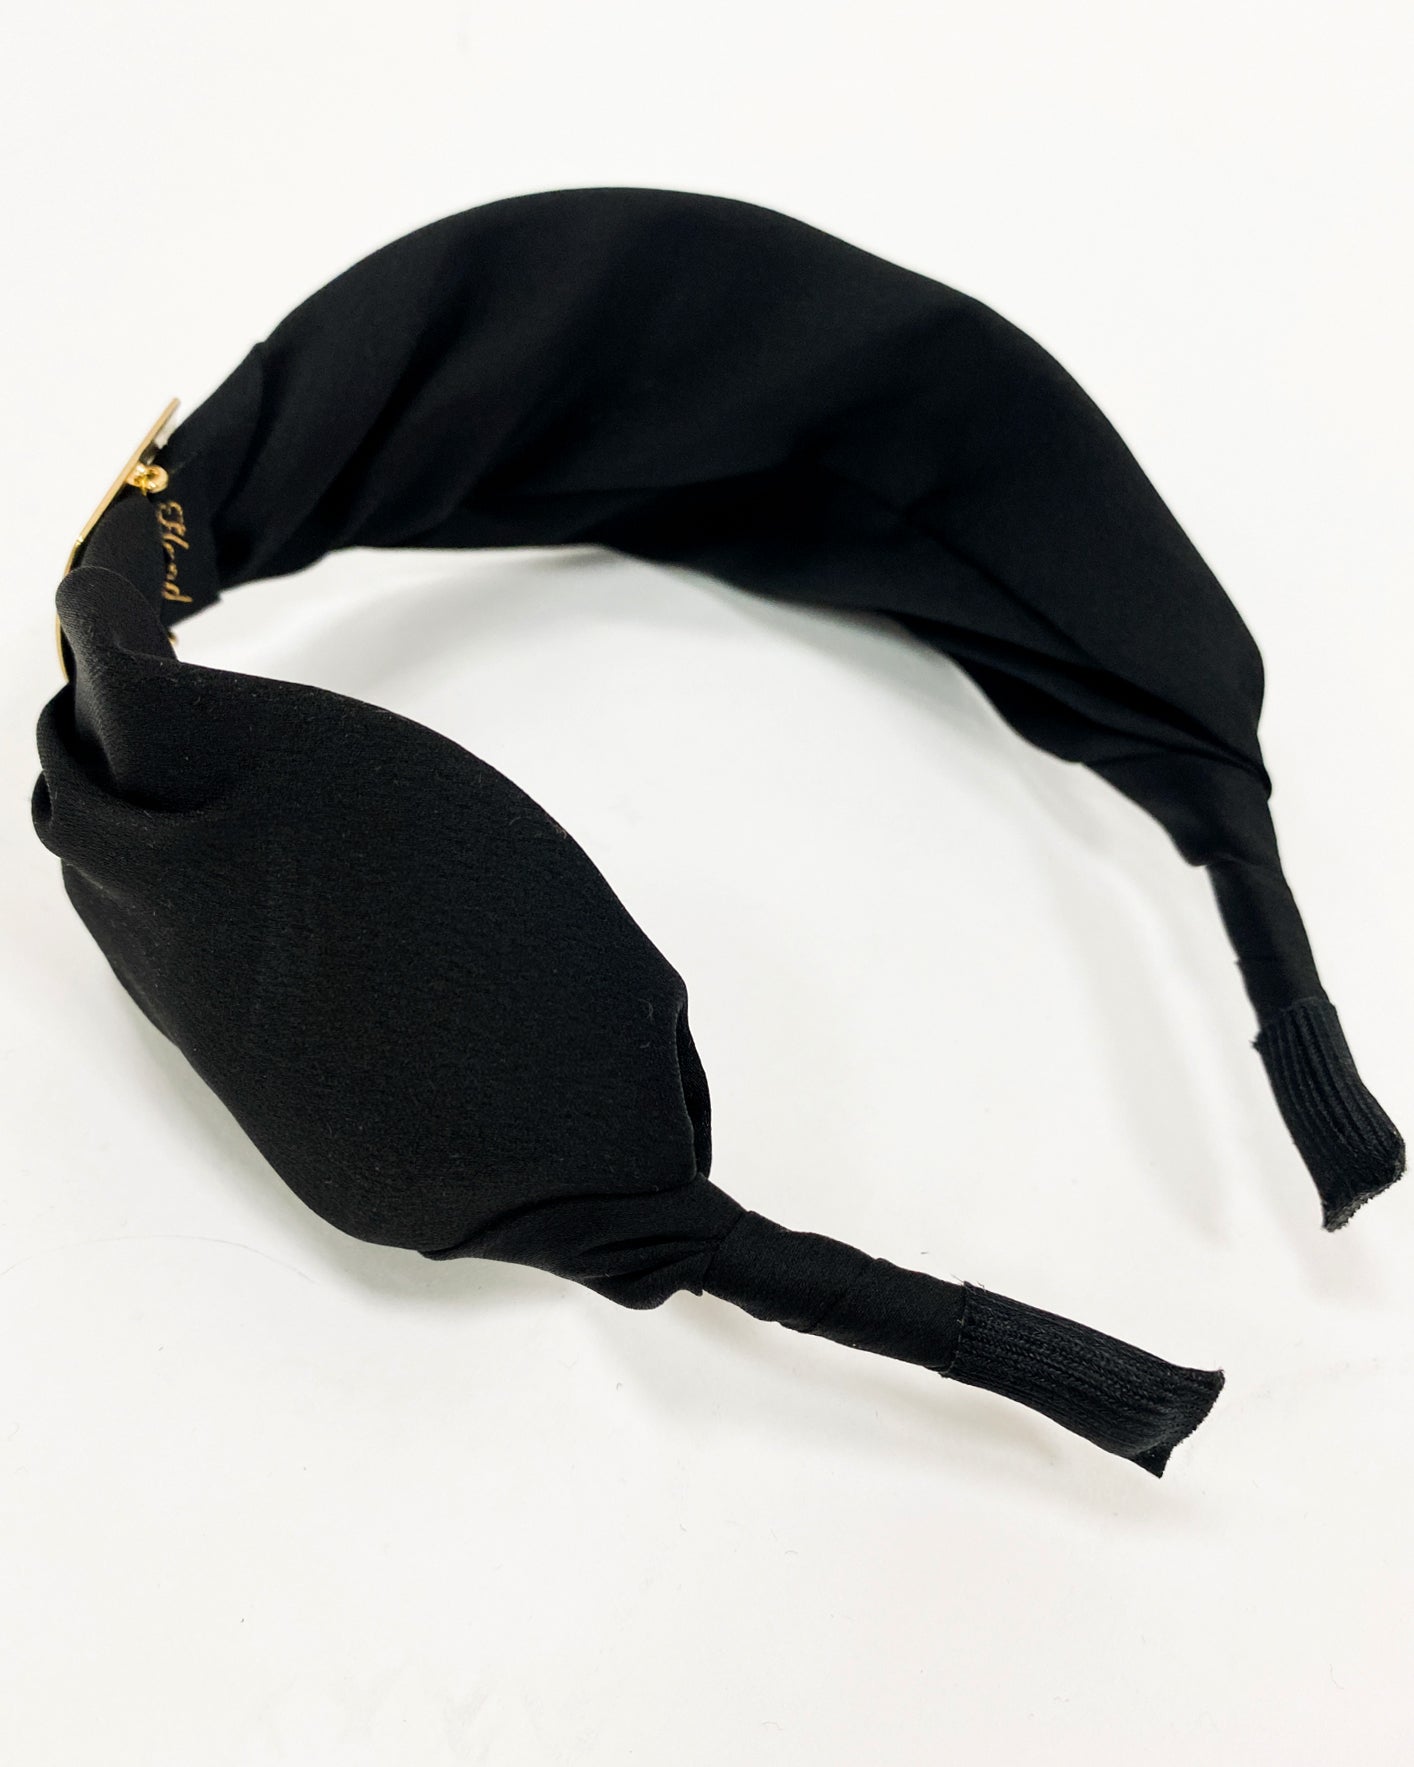 black fabric & gold square buckle headband *pre-order*